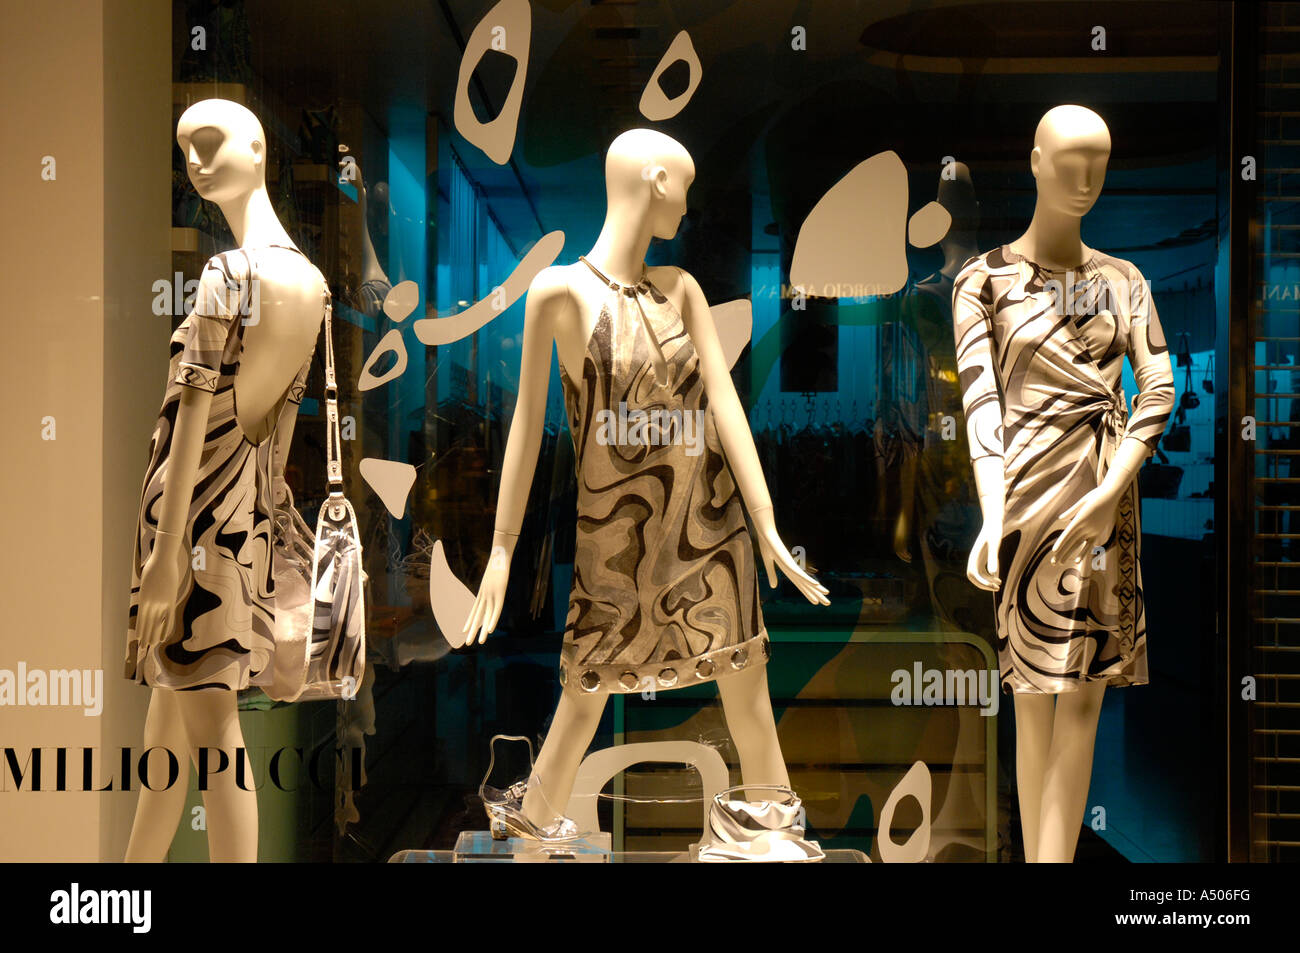 Emilio Pucci Italian fashion designer Stock Photo - Alamy